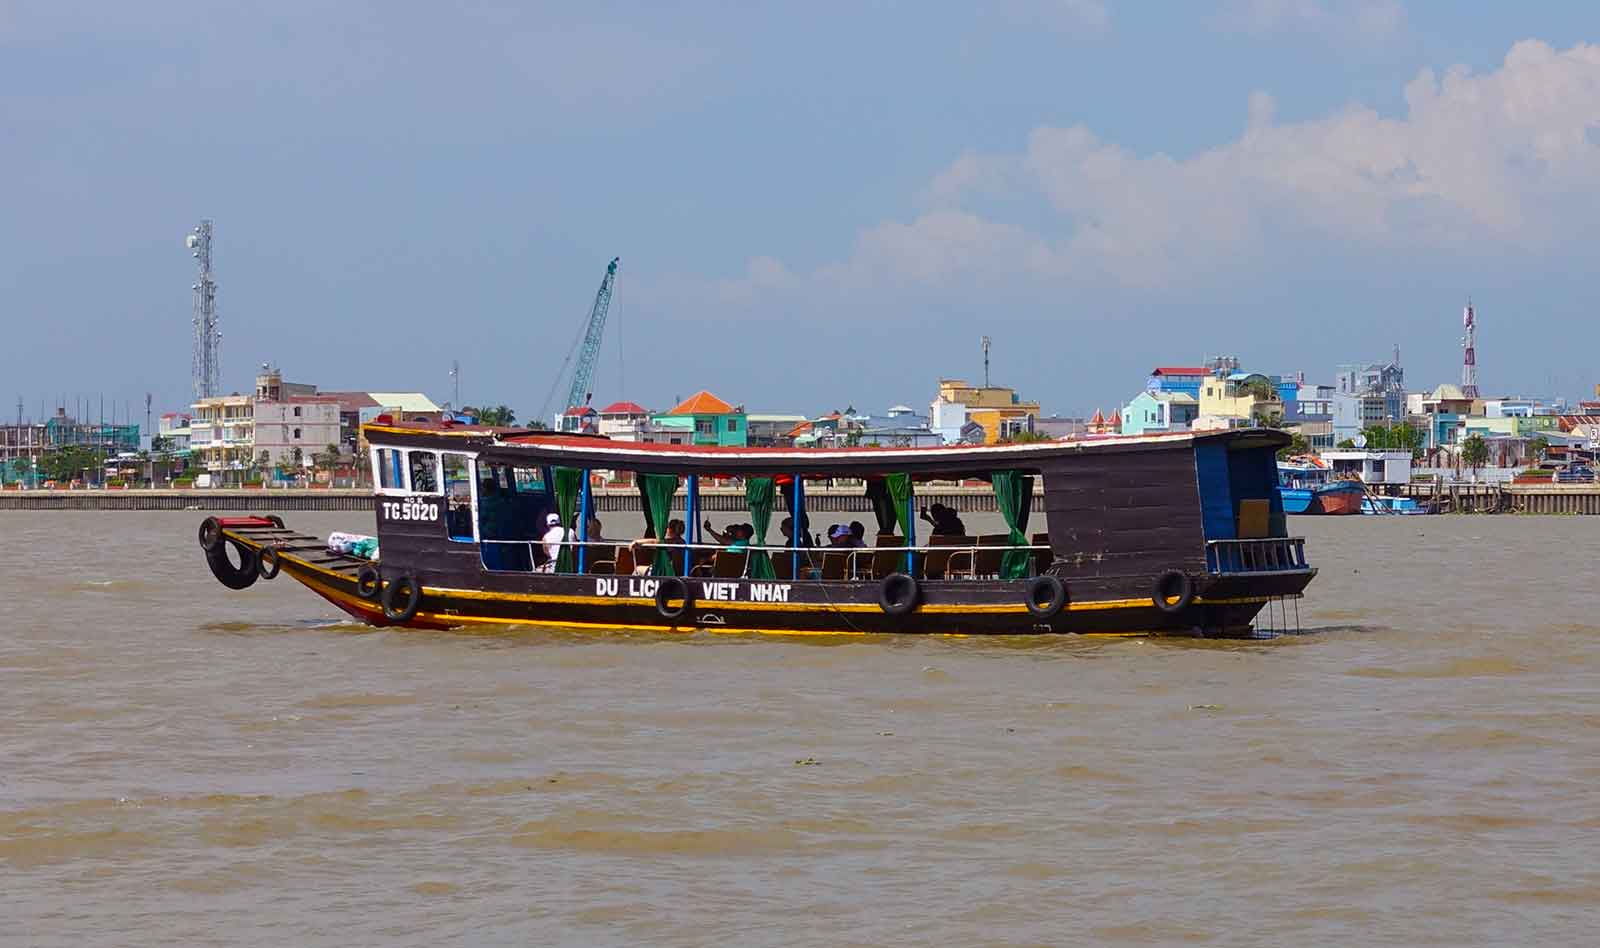 Mekongdelta2019-4